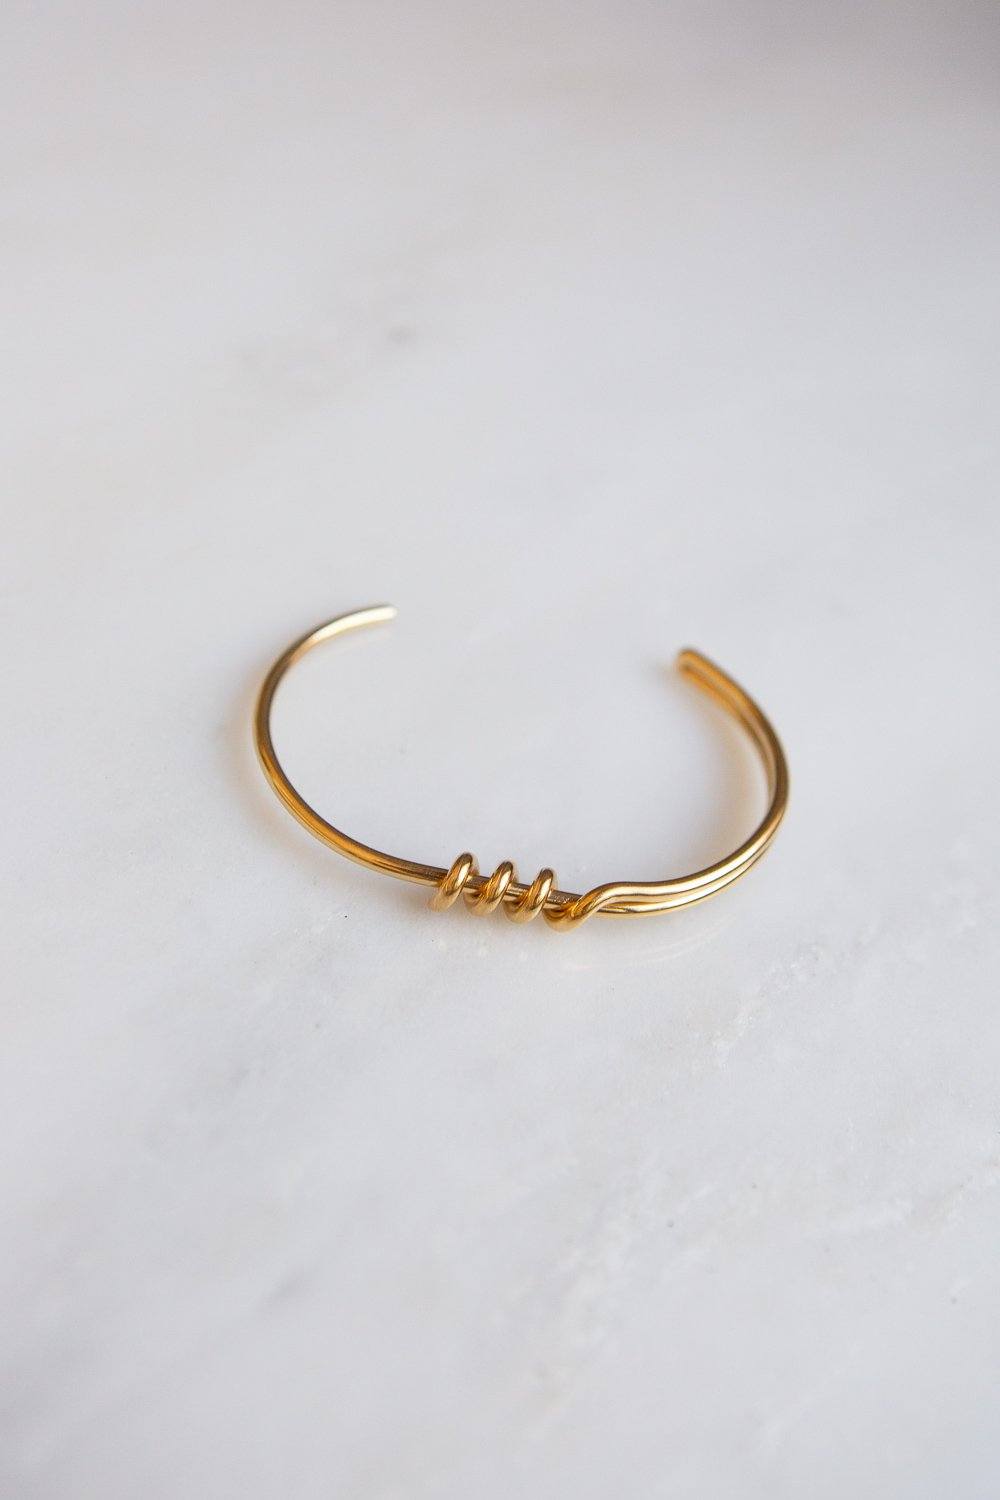 Minimalist Gold Wire Twist Cuff Bracelet - Wynter Bloom